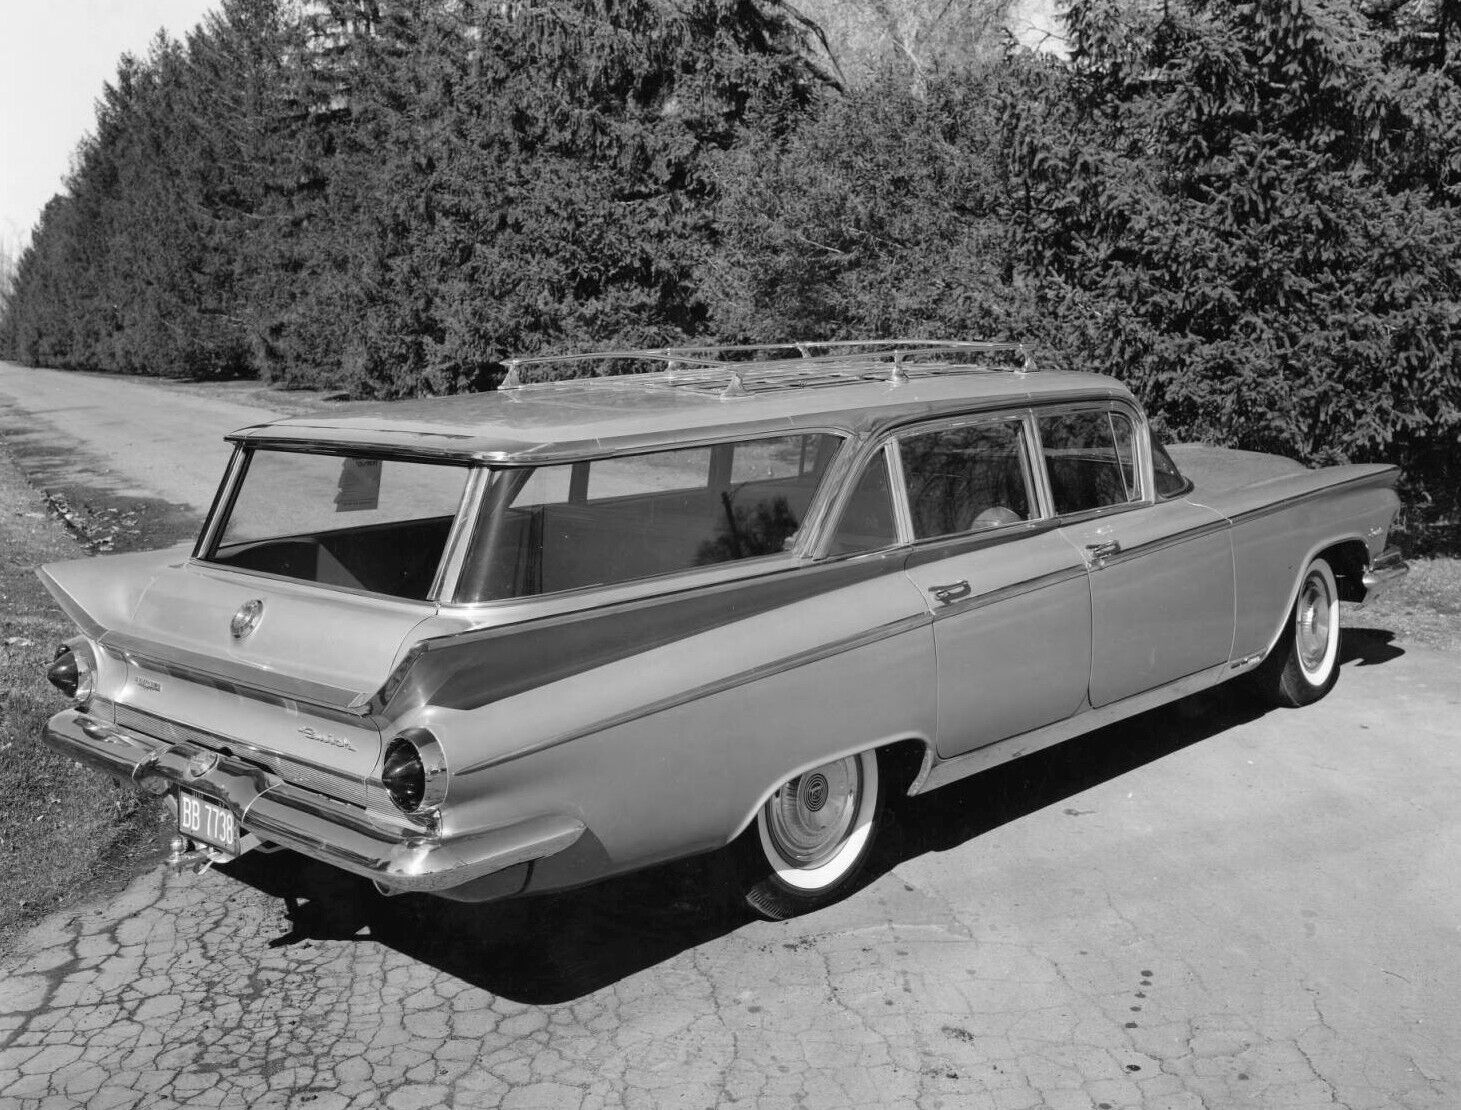 1959 Buick Invicta wagon press photo 8 x 10 Photograph